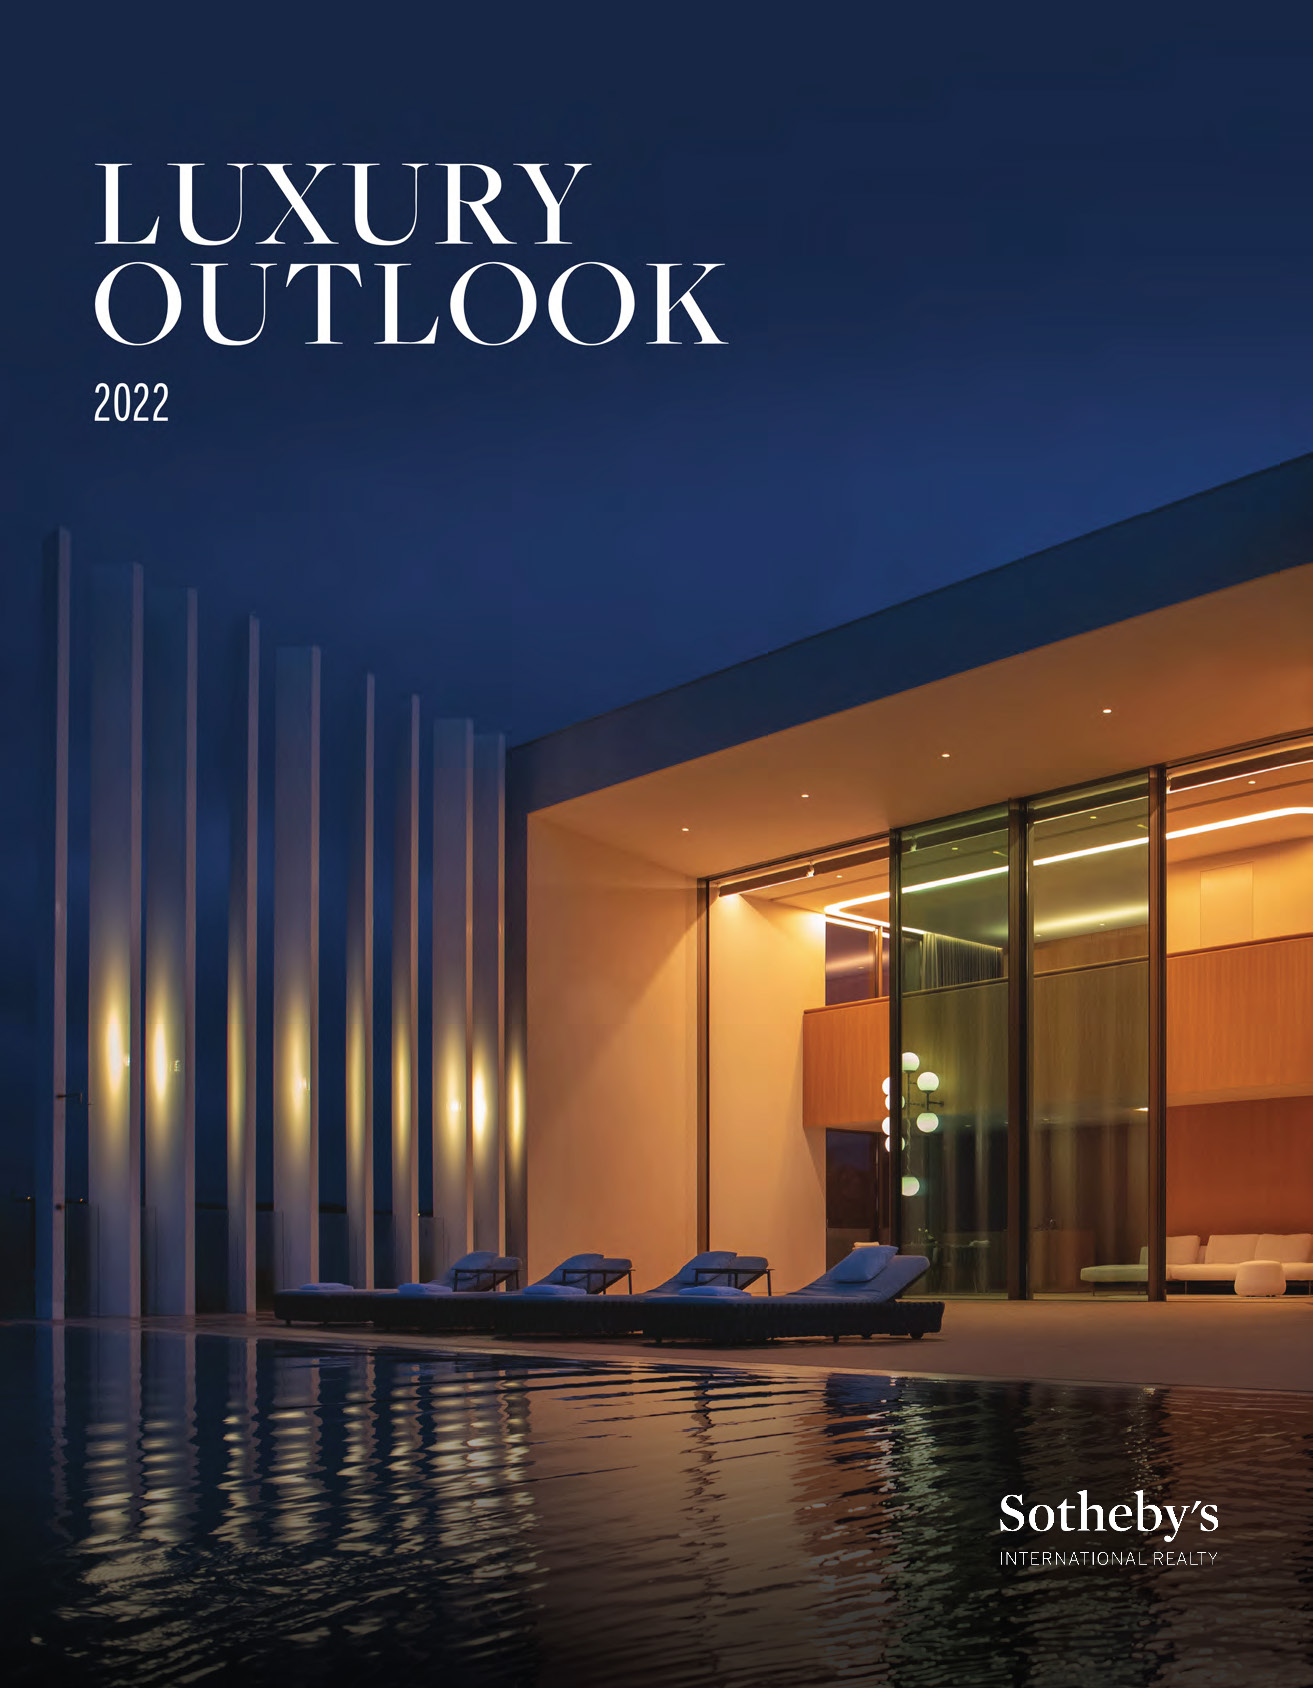 Sotheby's 2022 Luxury Outlook Report